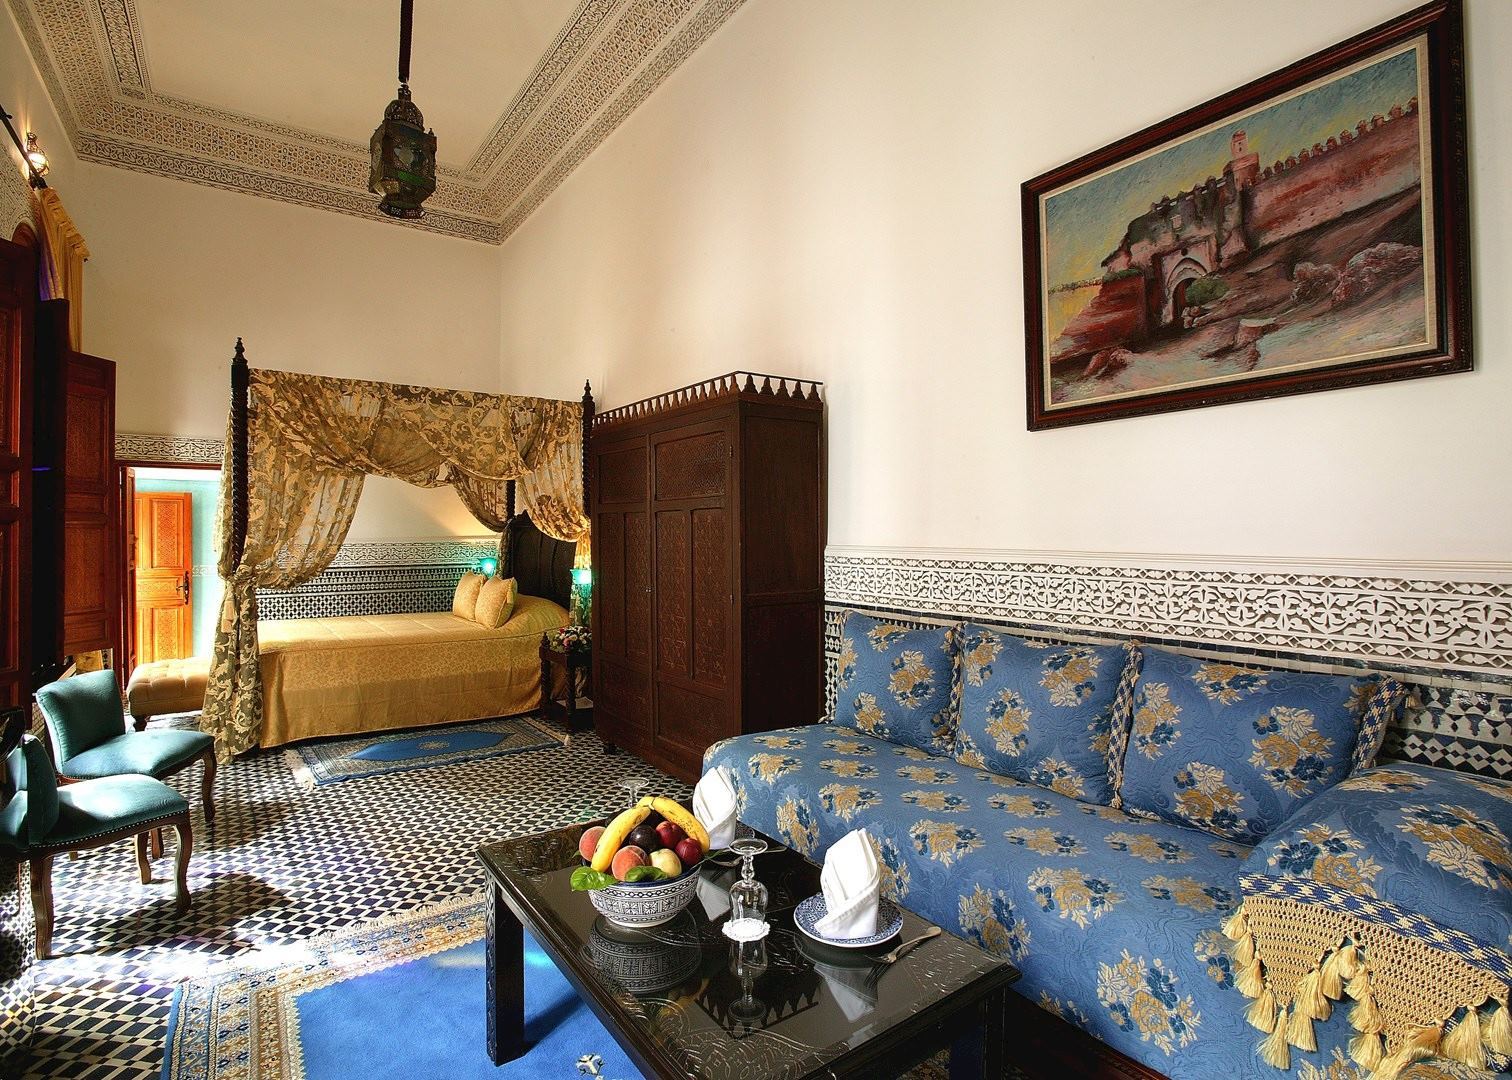 Riad Maison Bleue - Fez - Marrocos